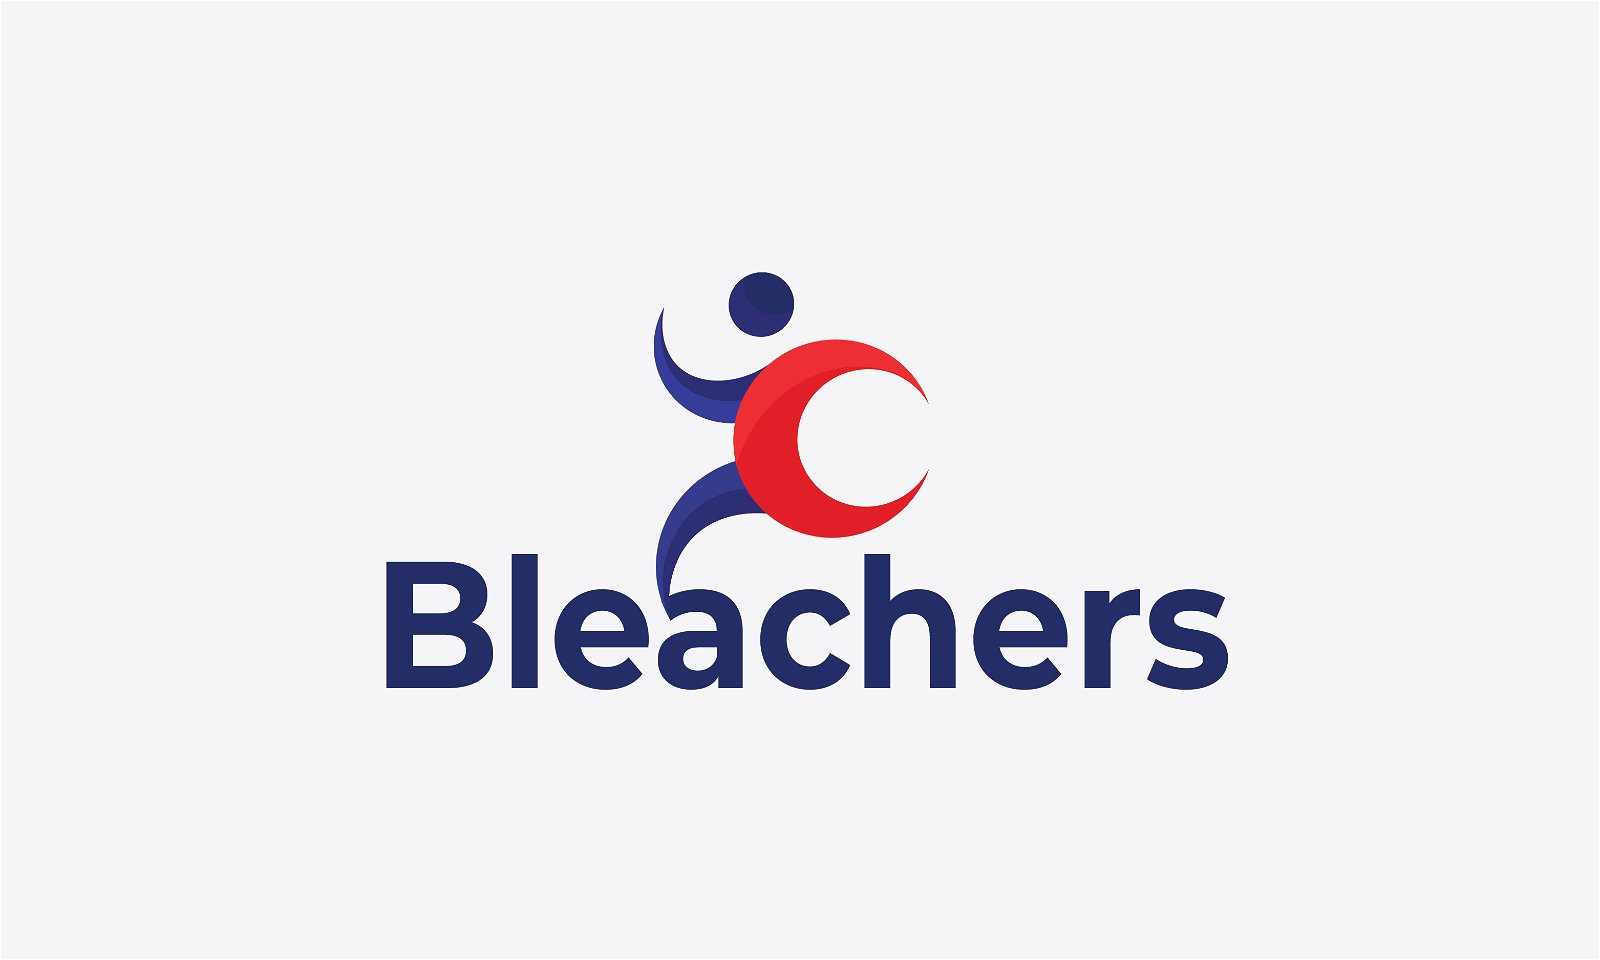 Bleachers.io - Creative brandable domain for sale